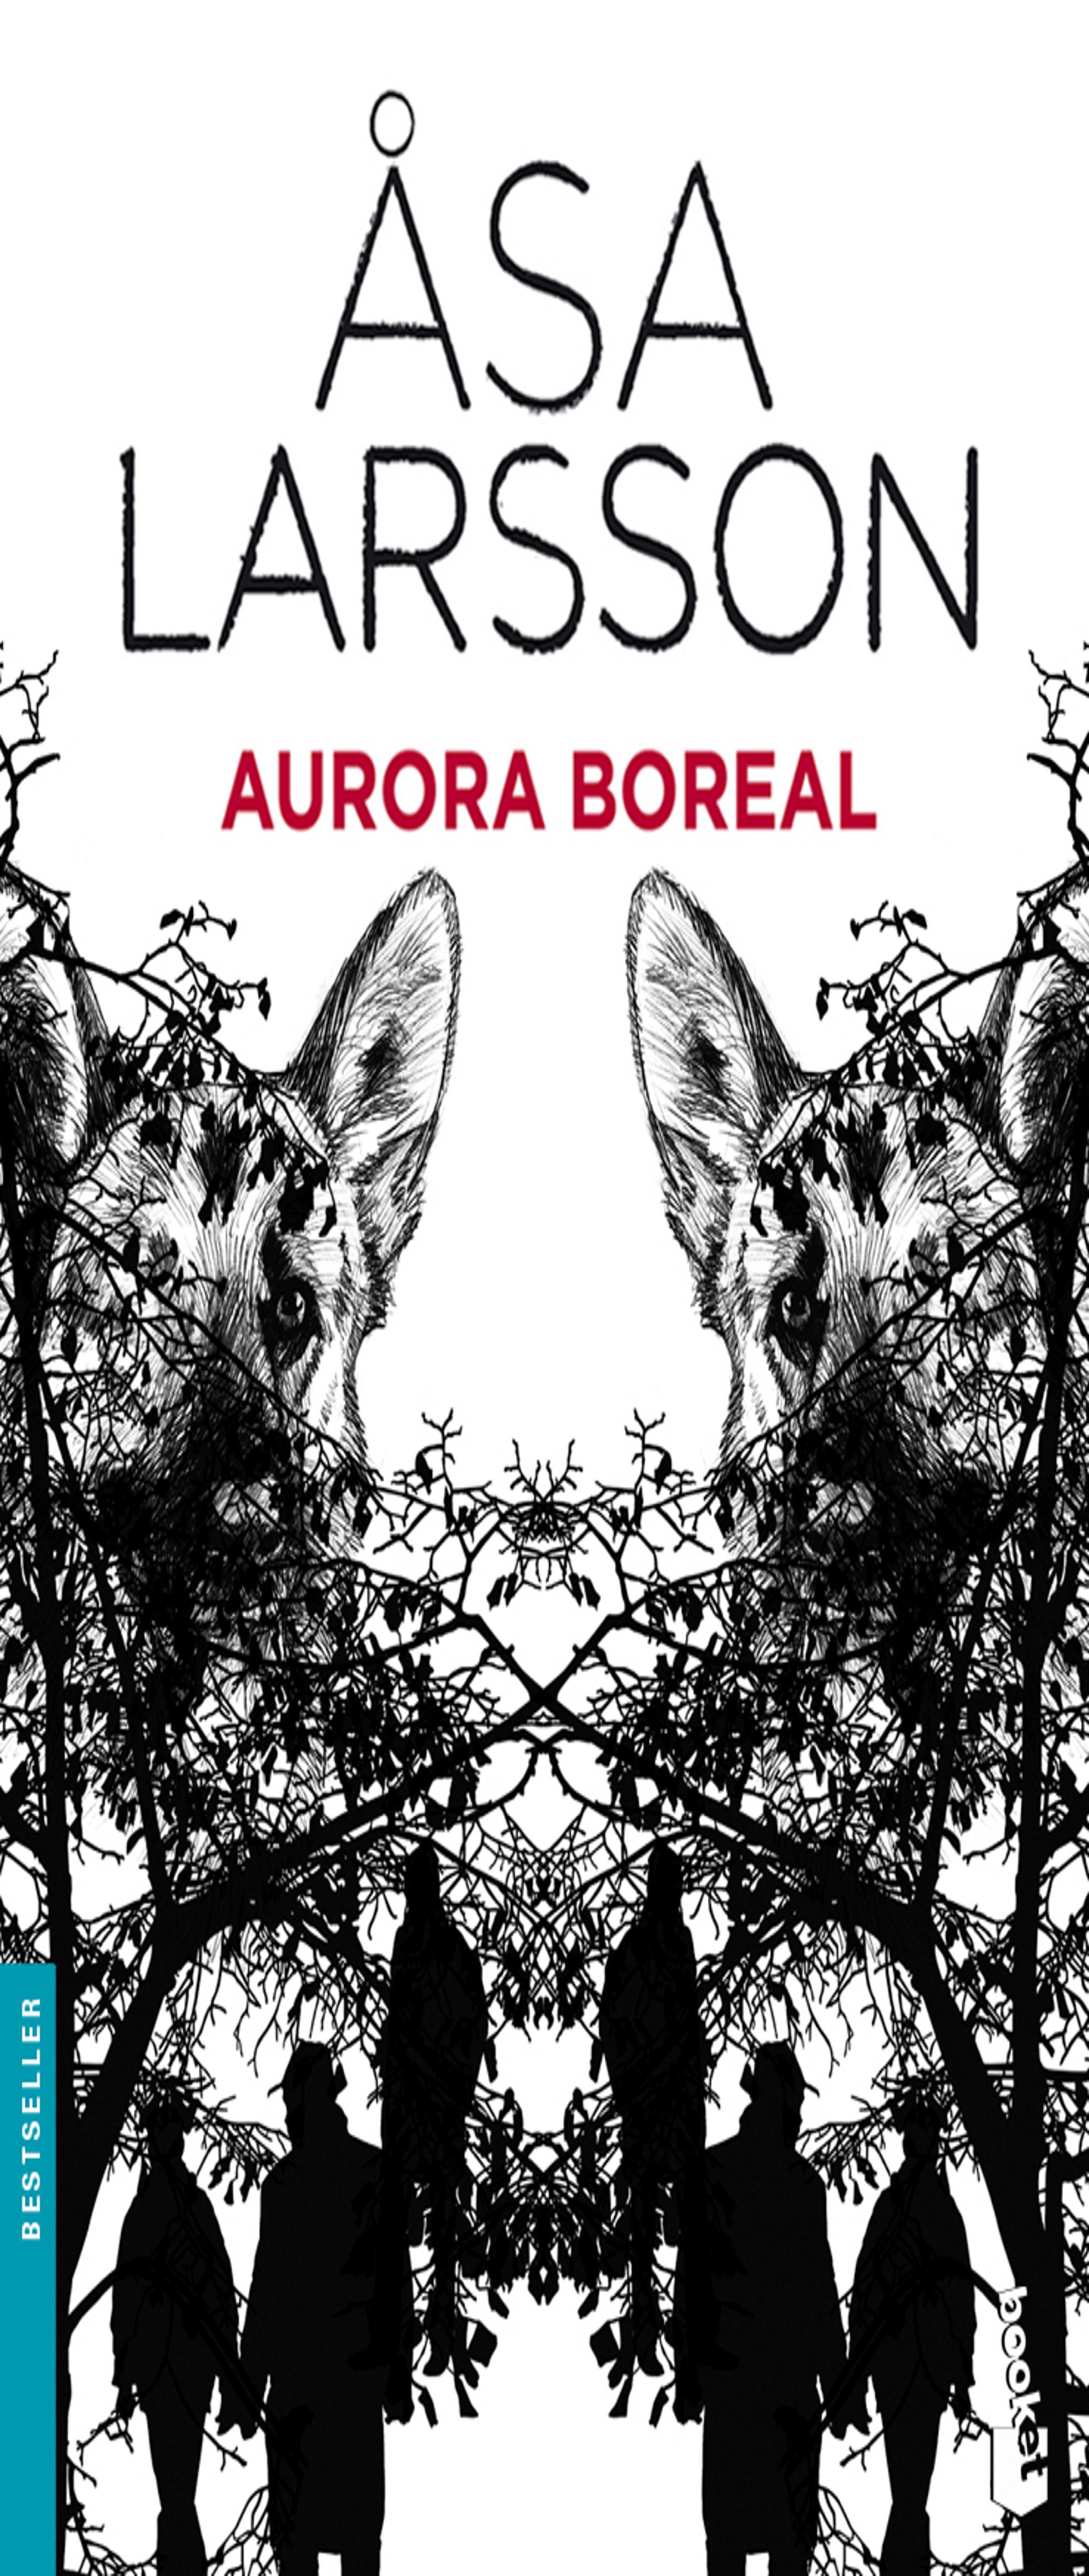 AURORA BOREAL